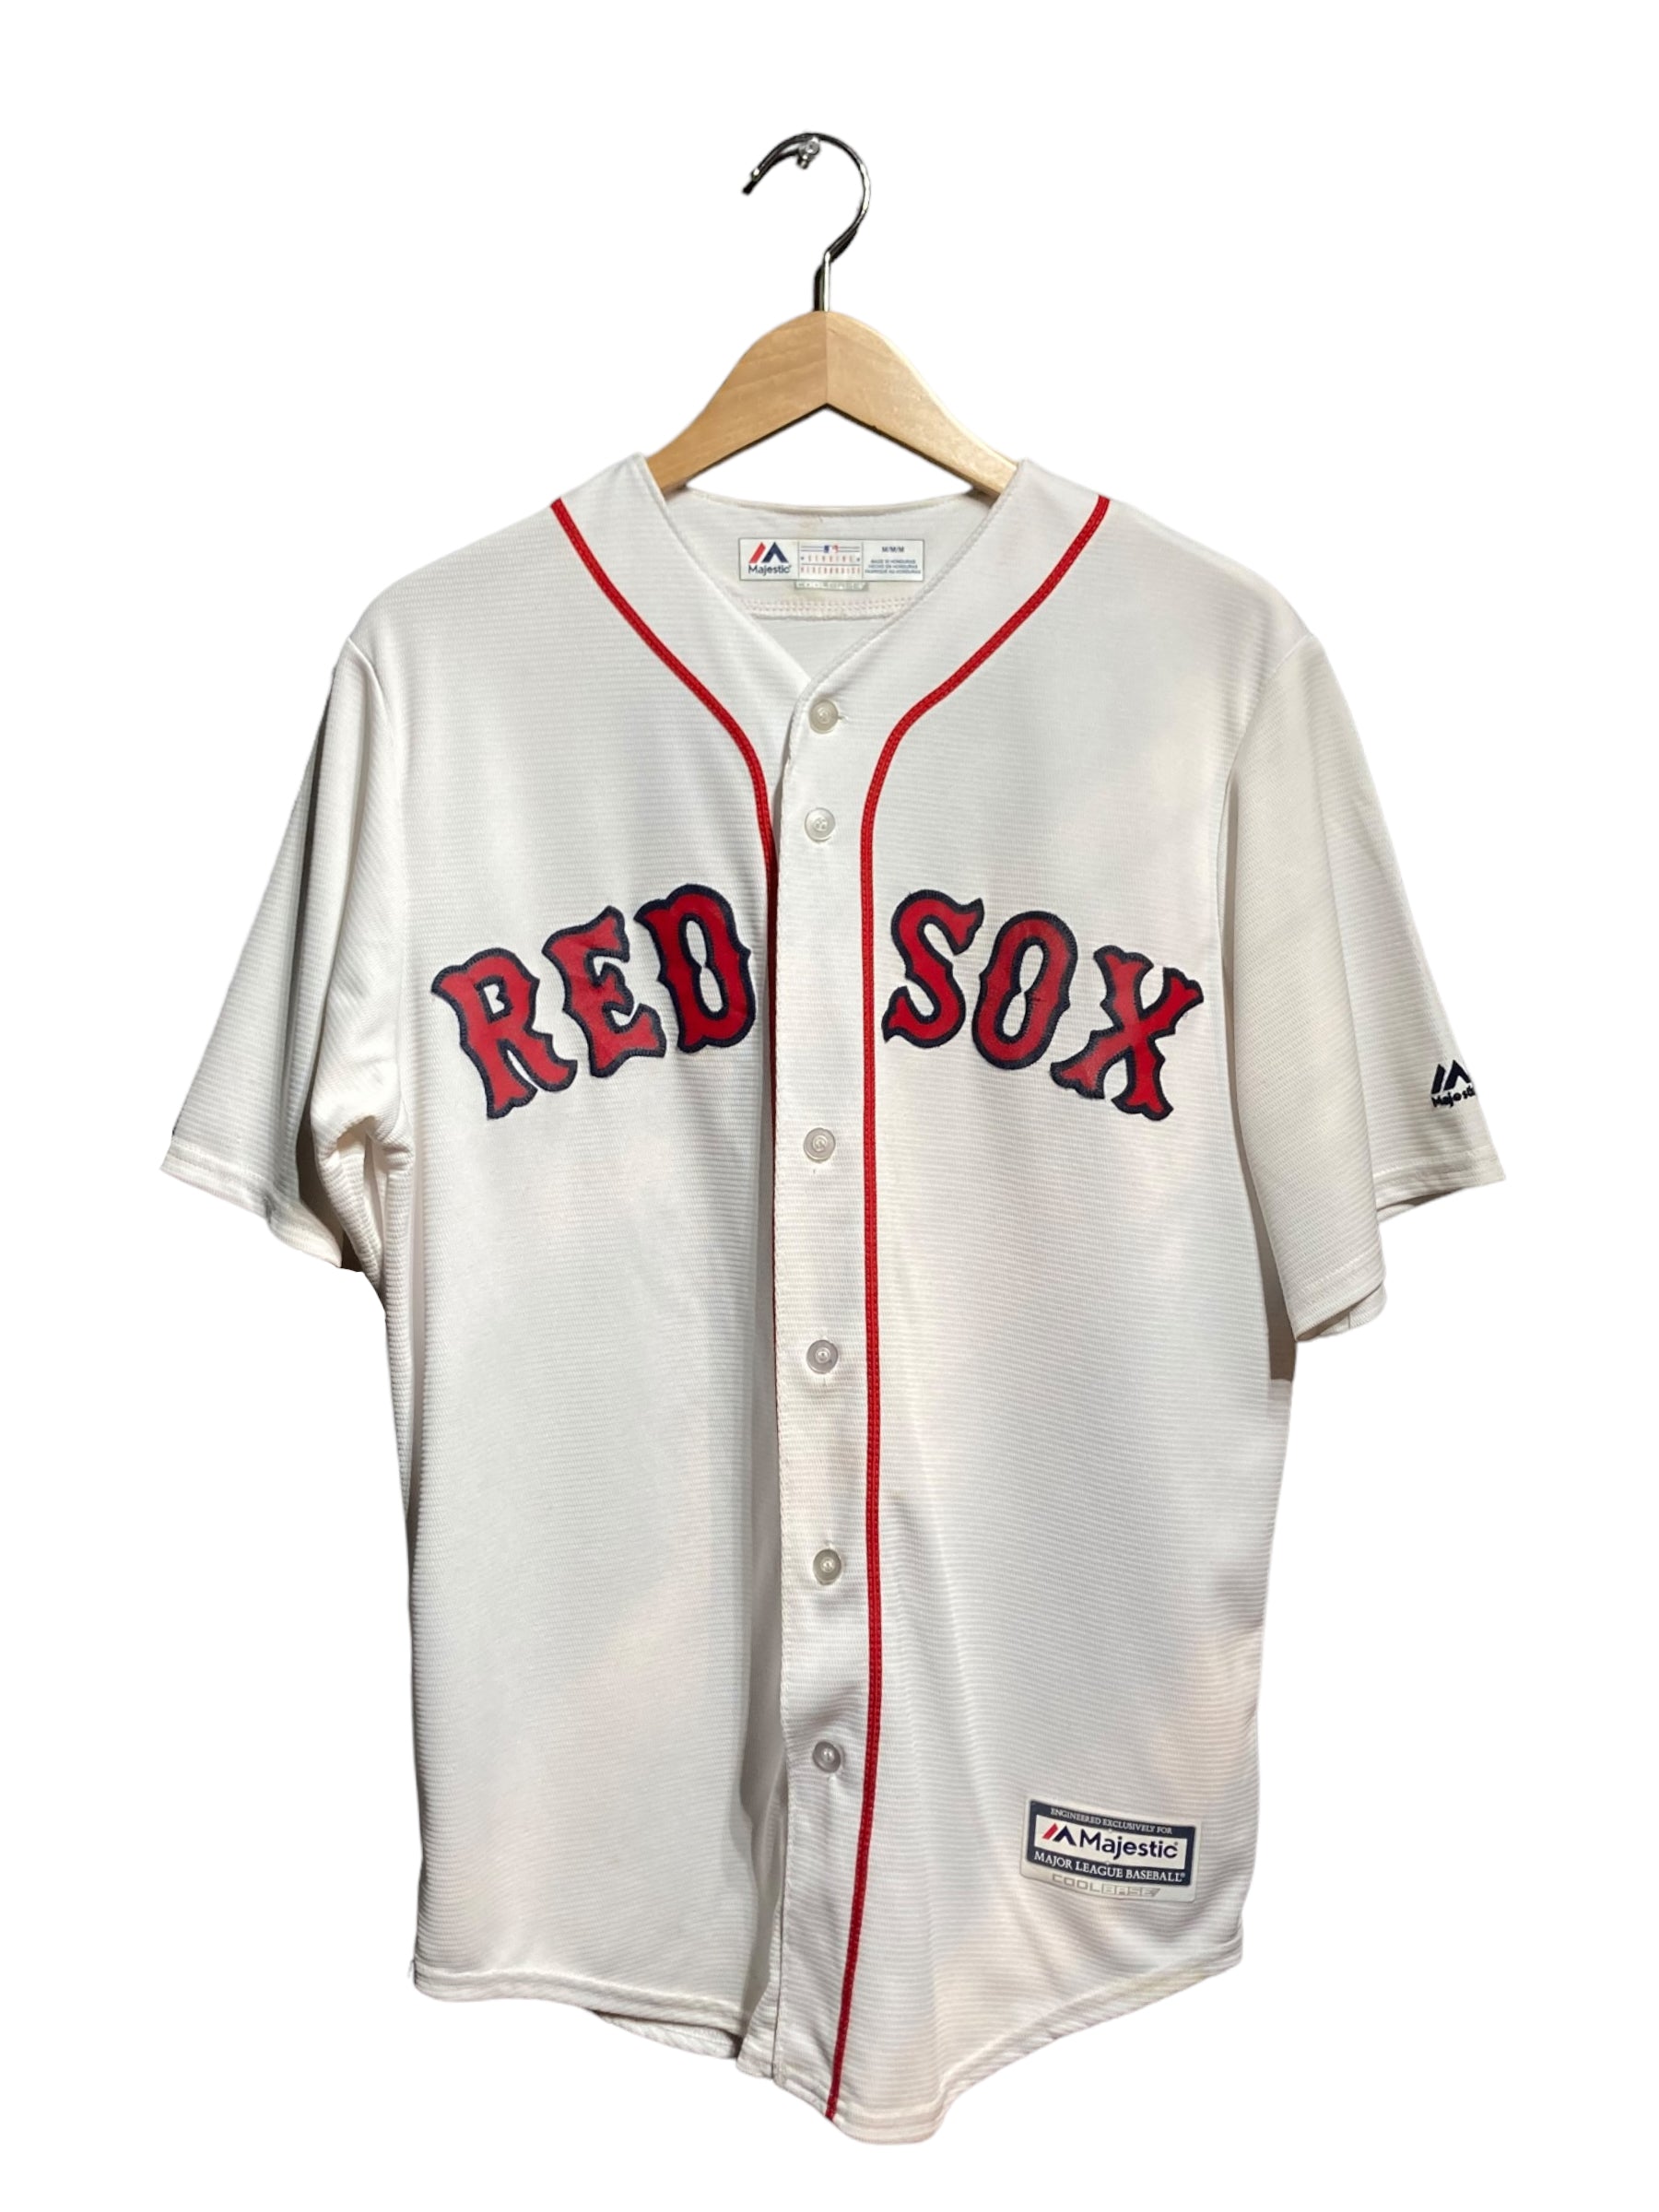 REDSOX レッドソックス Majestic MLB BASEBALL ベースボールシャツ ユニフォーム